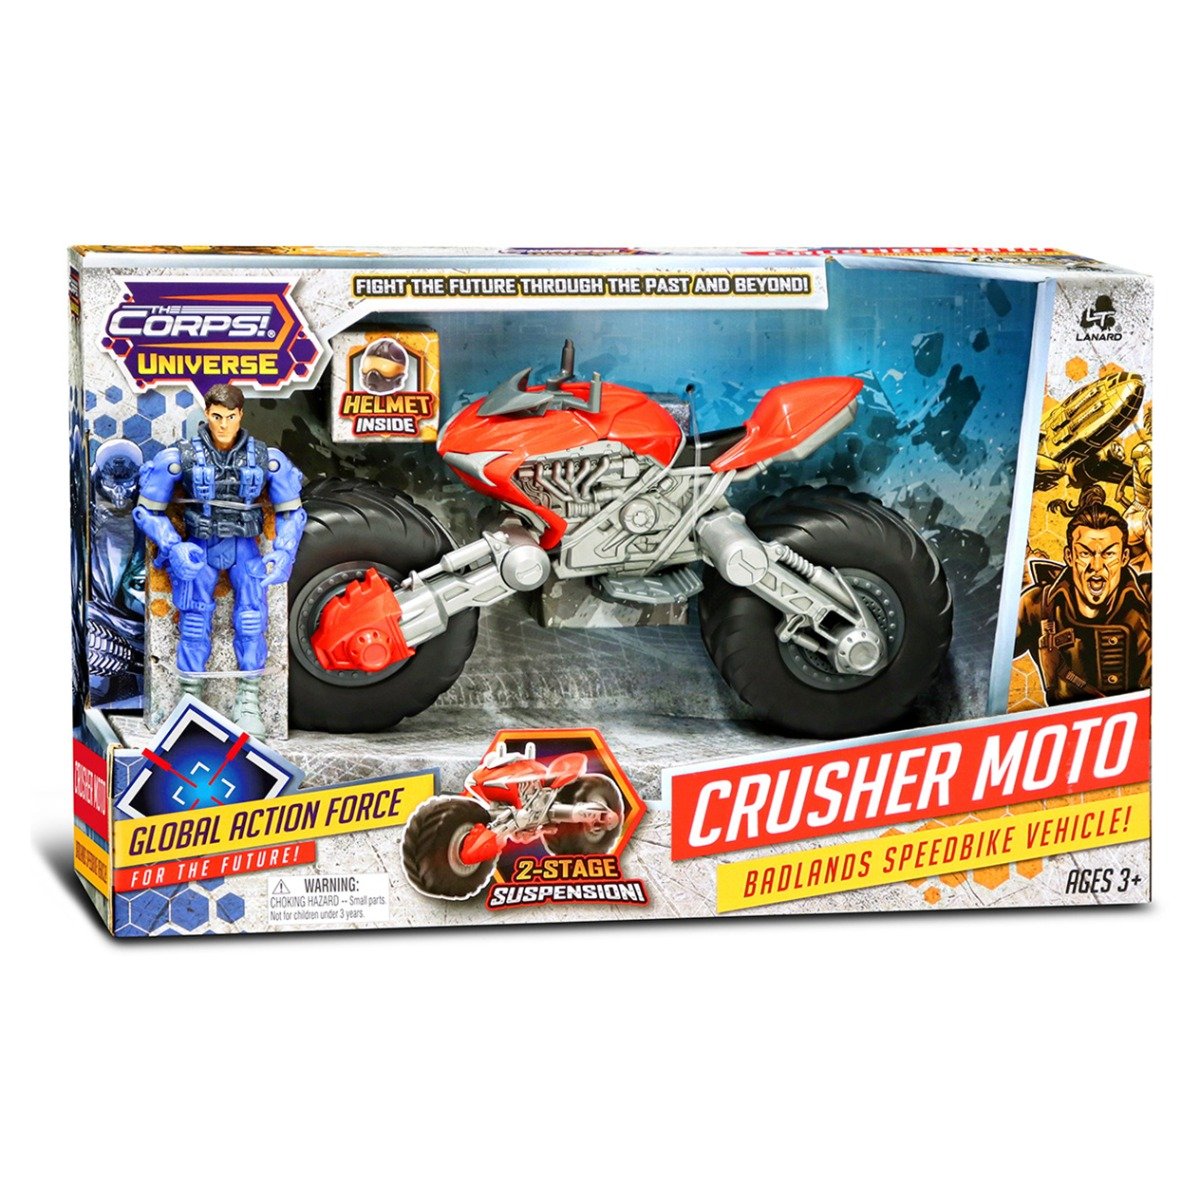 Set motocicleta cu figurina, Crusher Moto, The Corps Universe, Lanard Toys Corps